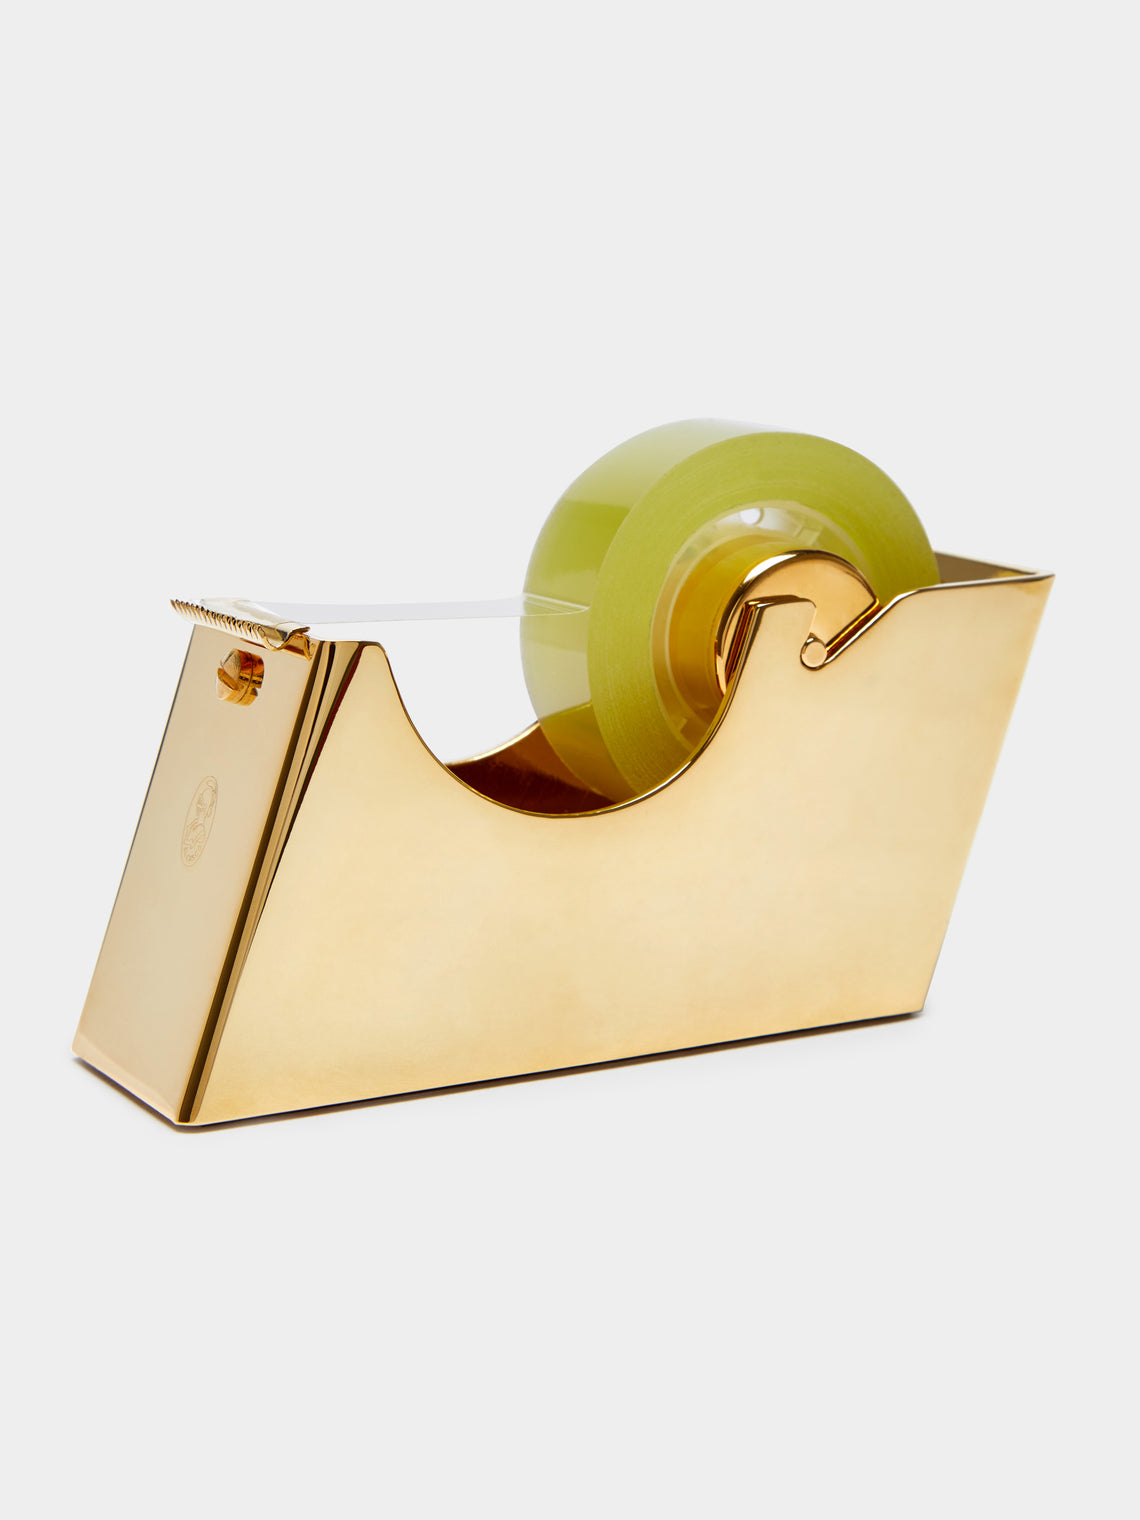 El Casco - Gold-Plated Tape Dispenser - Gold - ABASK